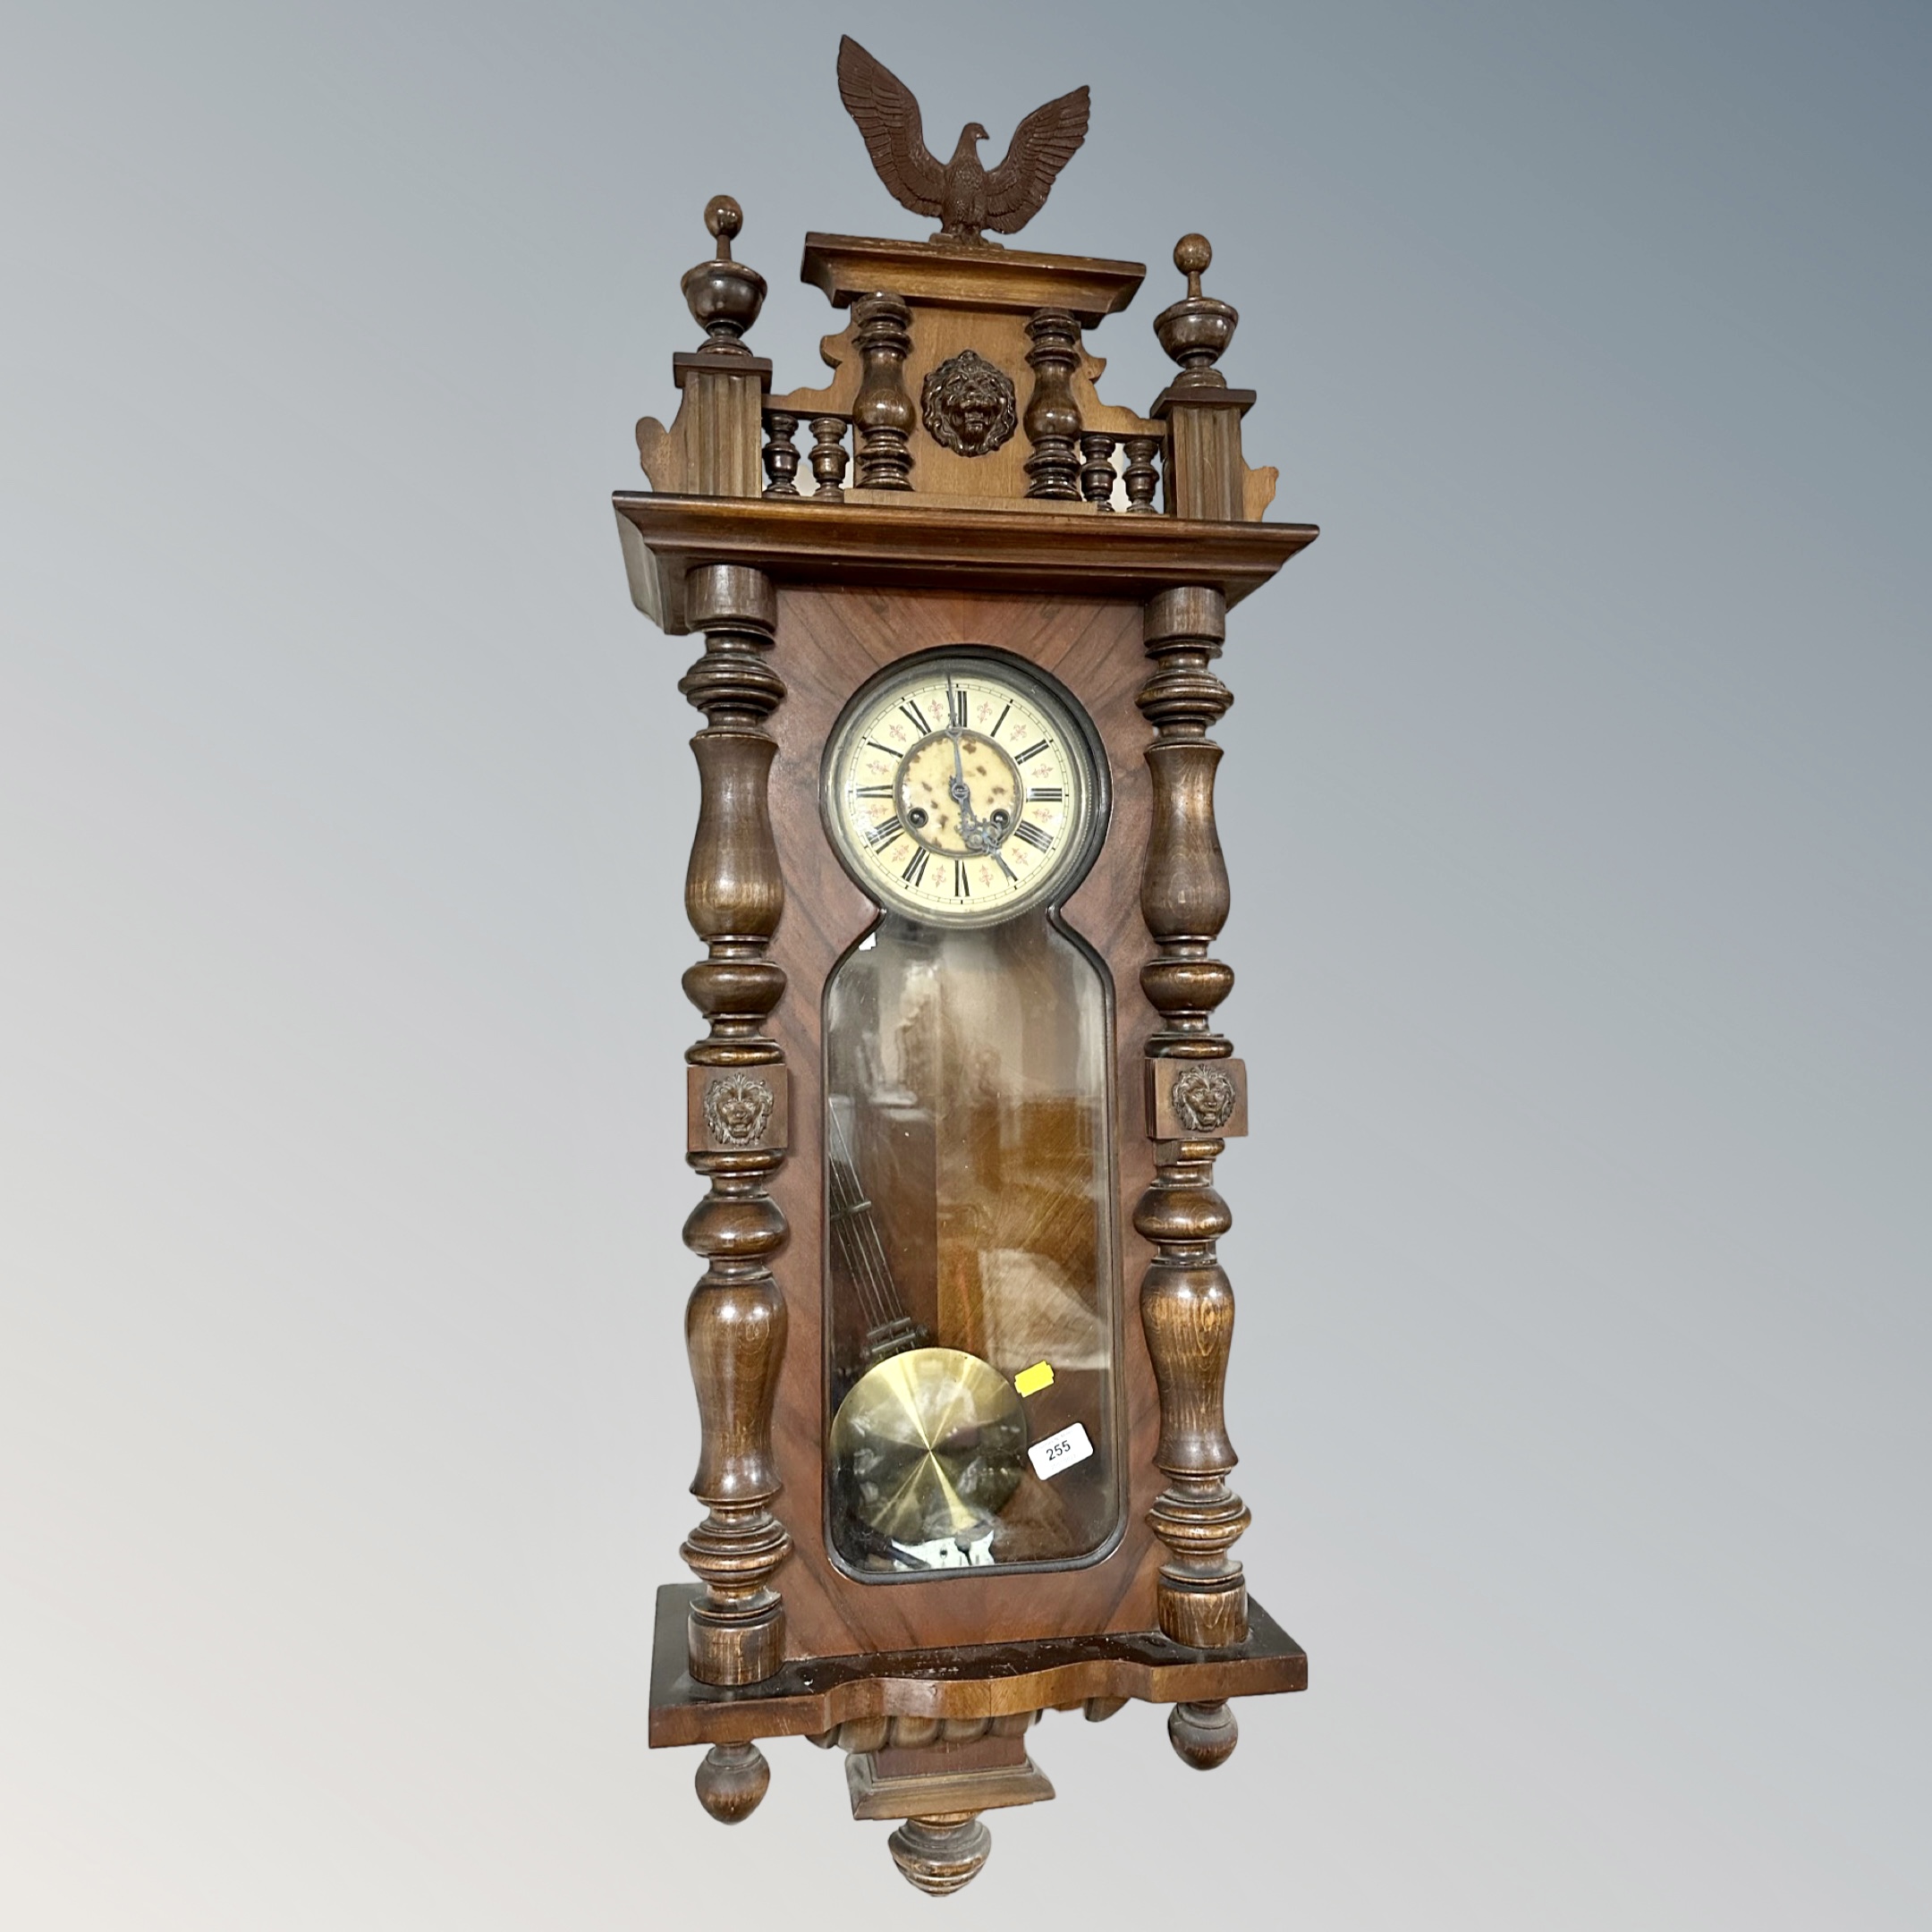 A 19th century Vienna wall clock surmounted by an eagle